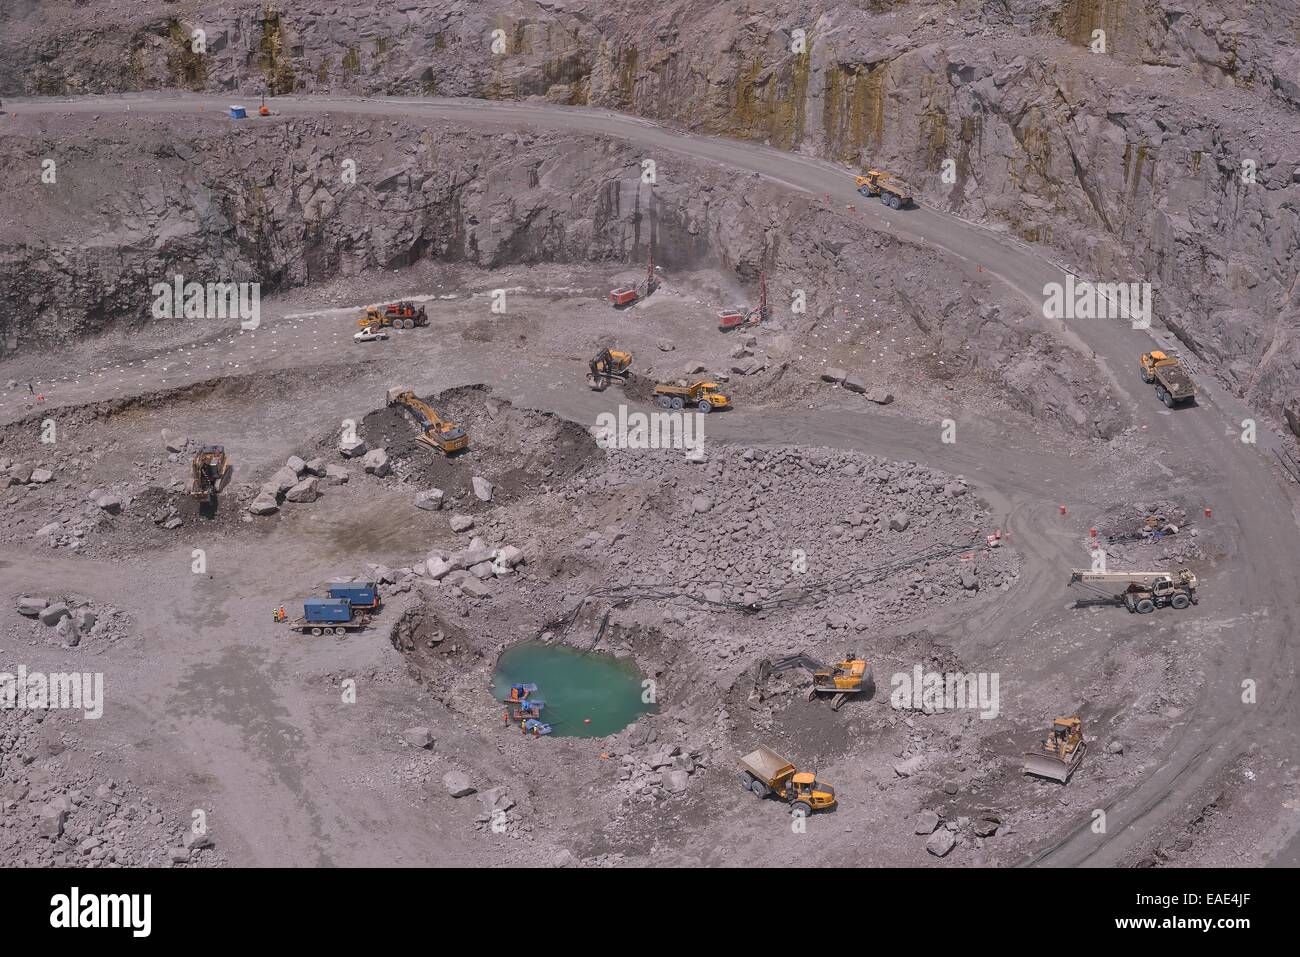 'Koidu 1' diamond mine, part of diamond company Koidu Ltd., Koidu Kimberlite Project, Koidu, Koidu-Sefadu, Tankoro Chiefdom Stock Photo